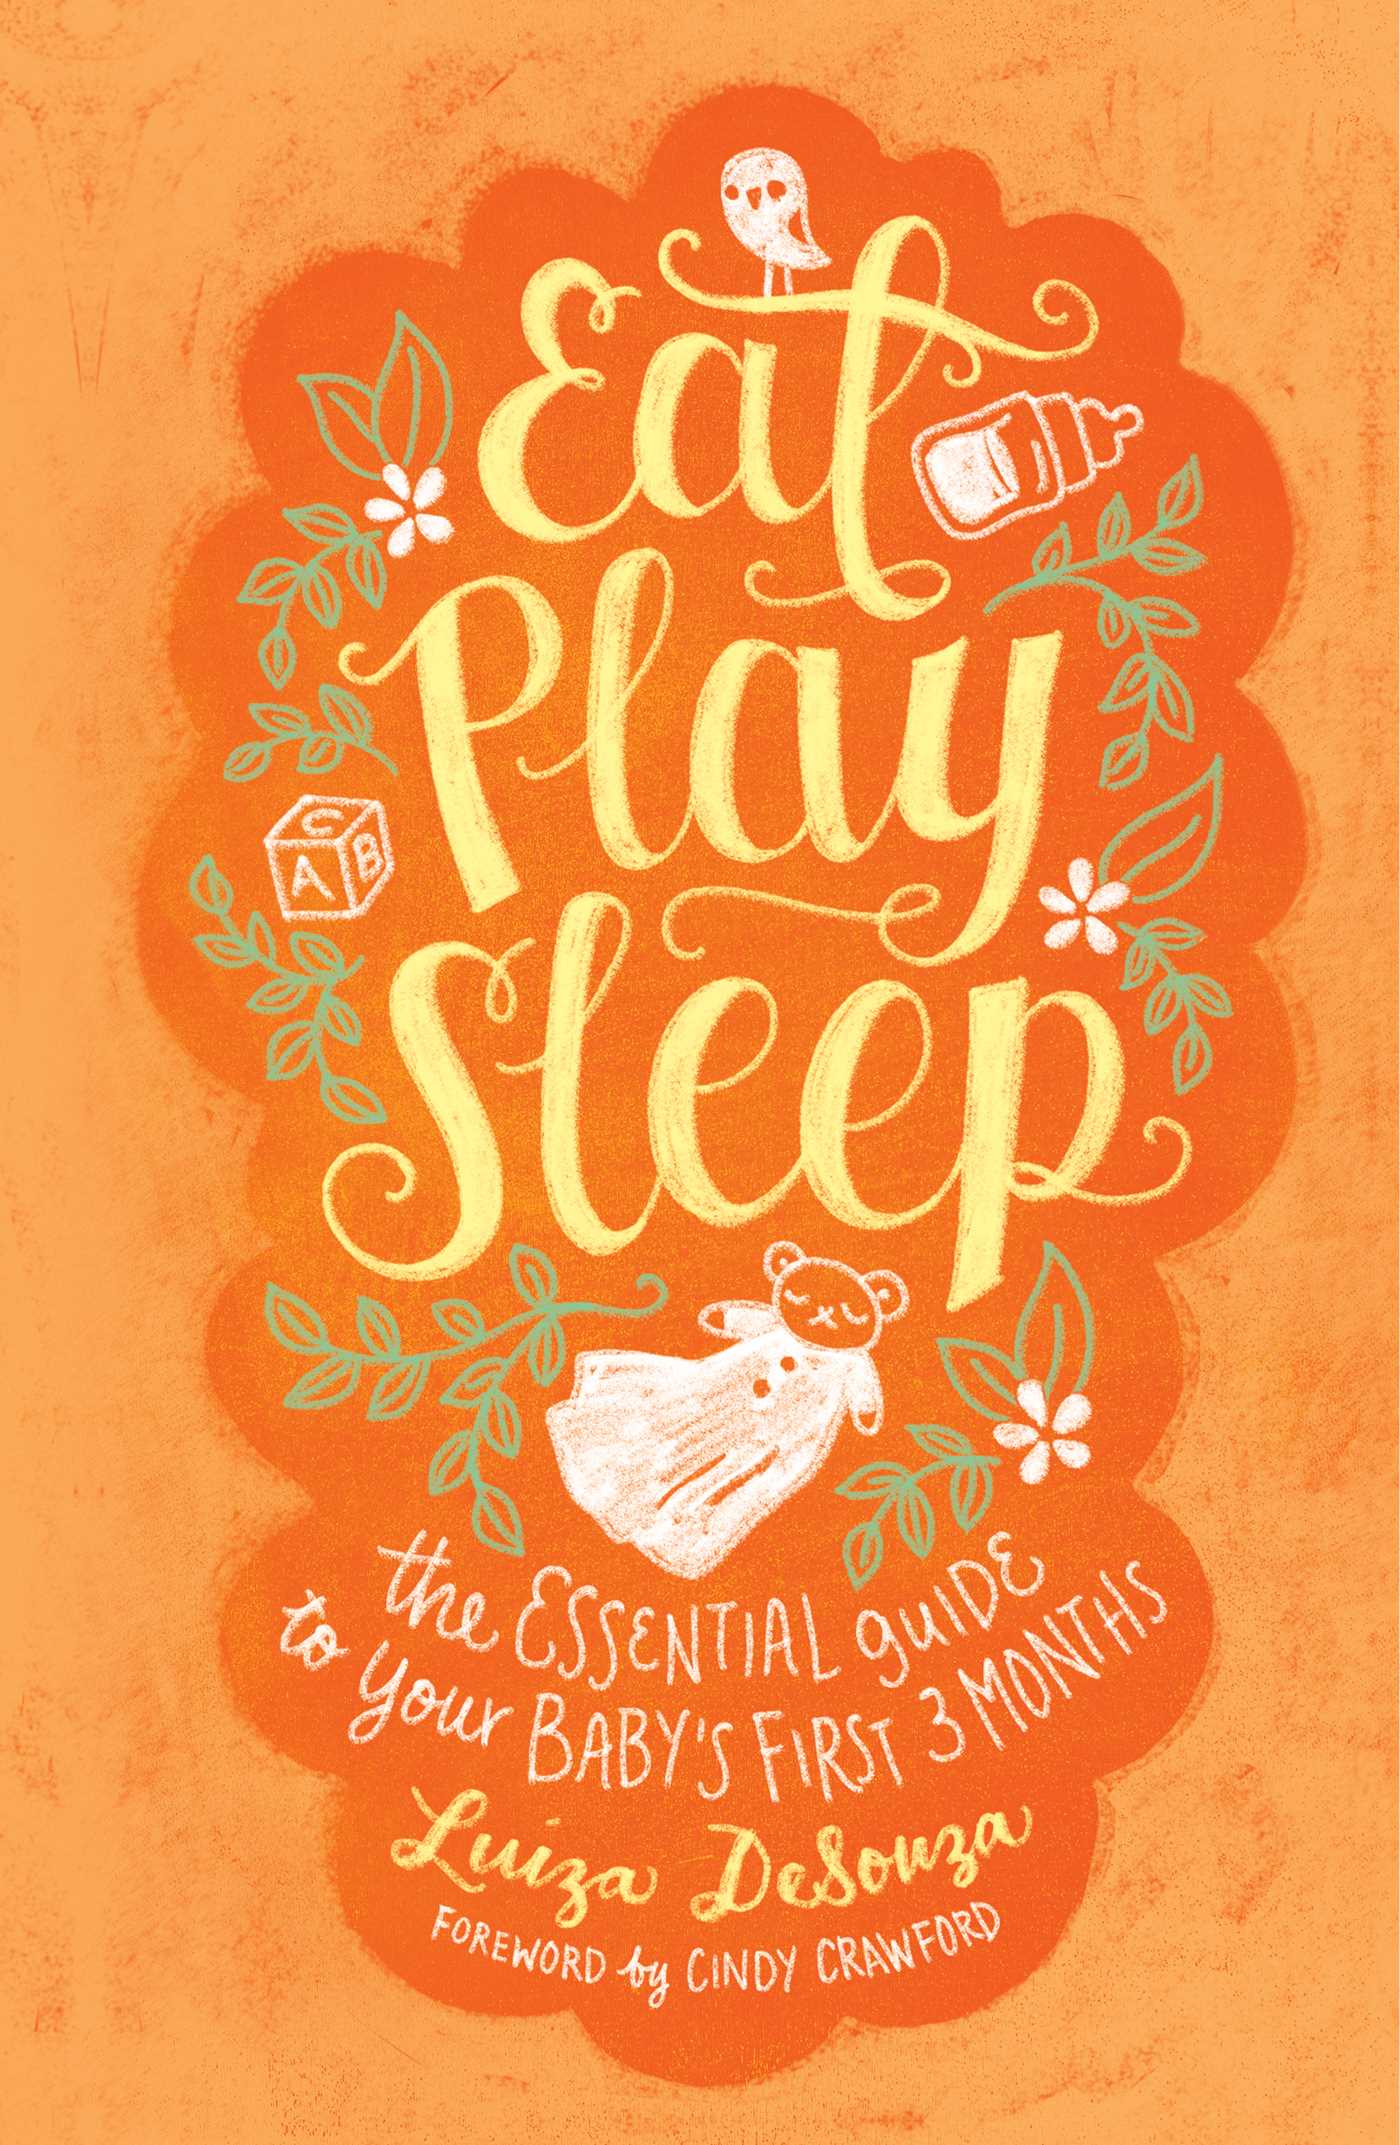 Bookcover: "Eat, Play, Sleep" by Luiza DeSouza 